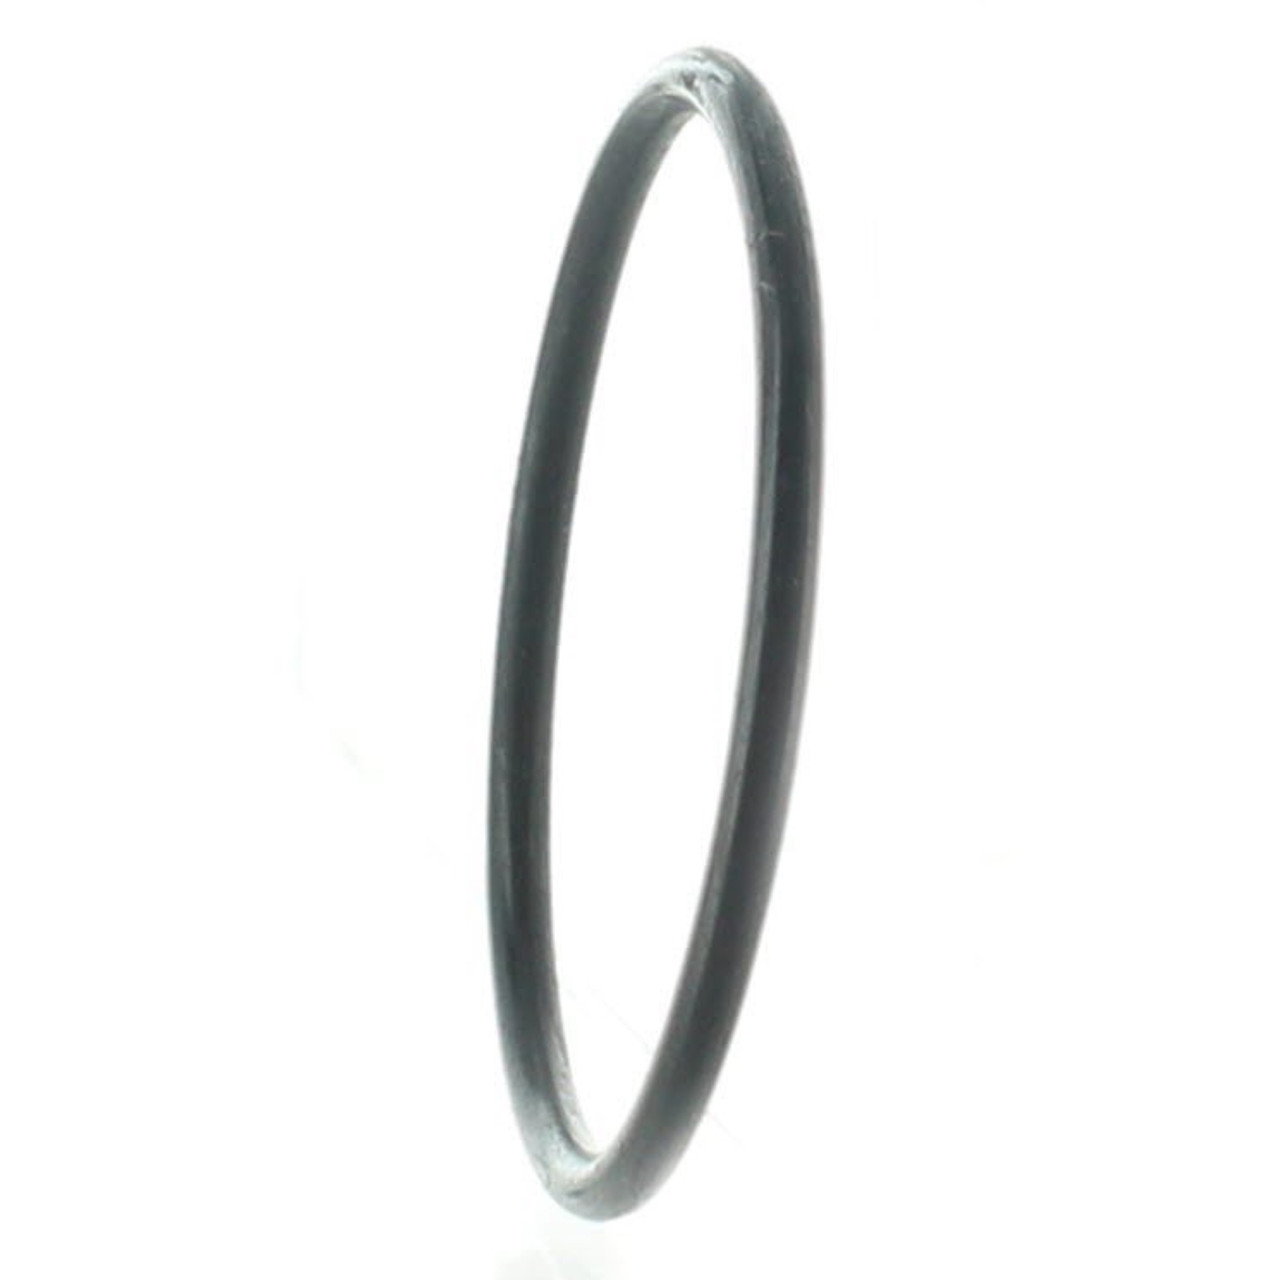 Sea-Doo New OEM Cylinder Head Rubber O-Ring, 420950870